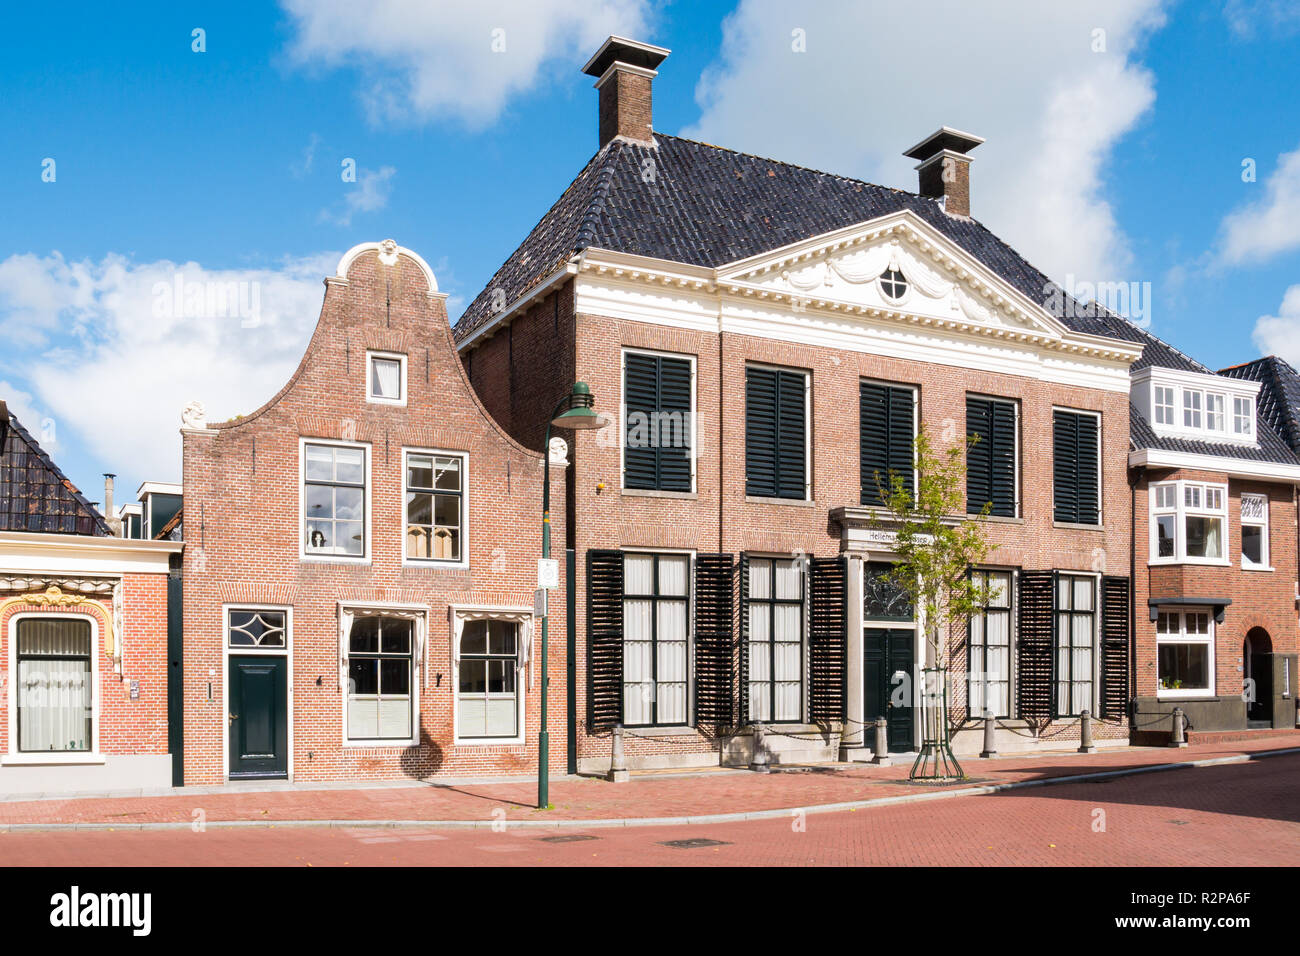 Facciate di case storiche nella città vecchia di Dokkum, Friesland, Paesi Bassi Foto Stock